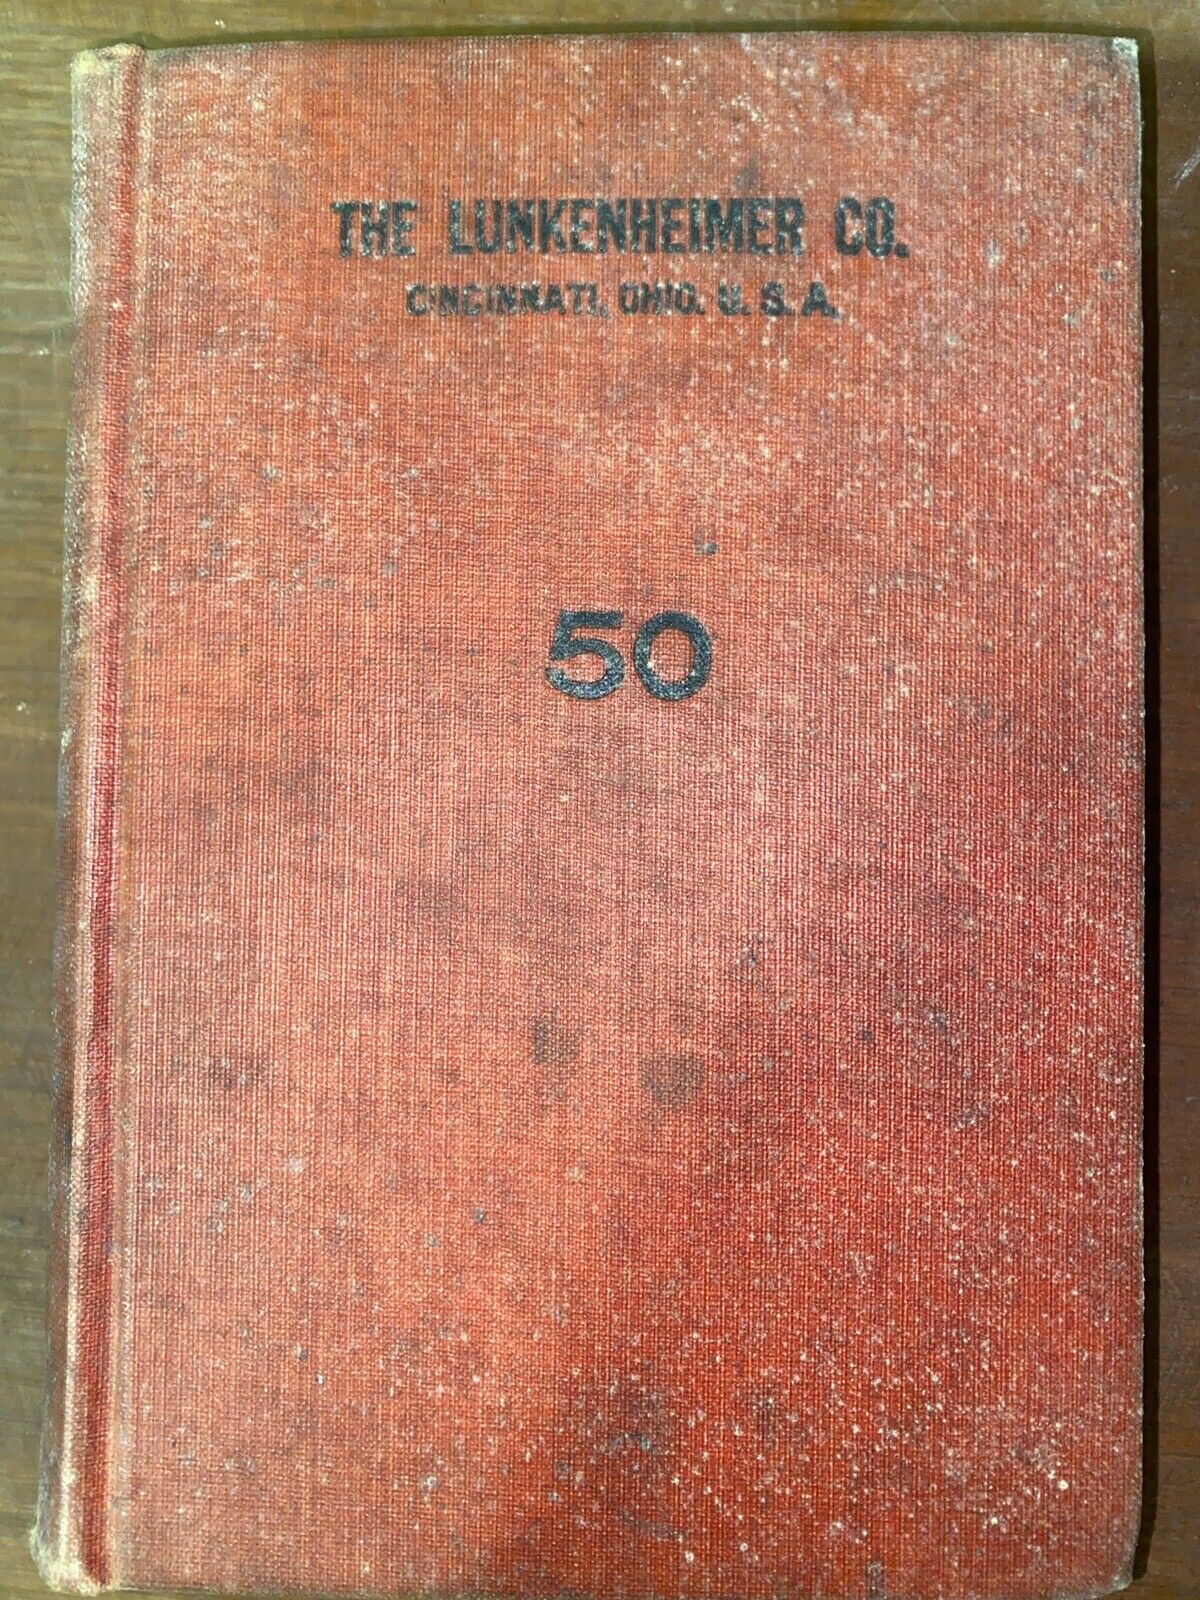 The Lunkenheimer CO. CINCINNATI OHIO 50